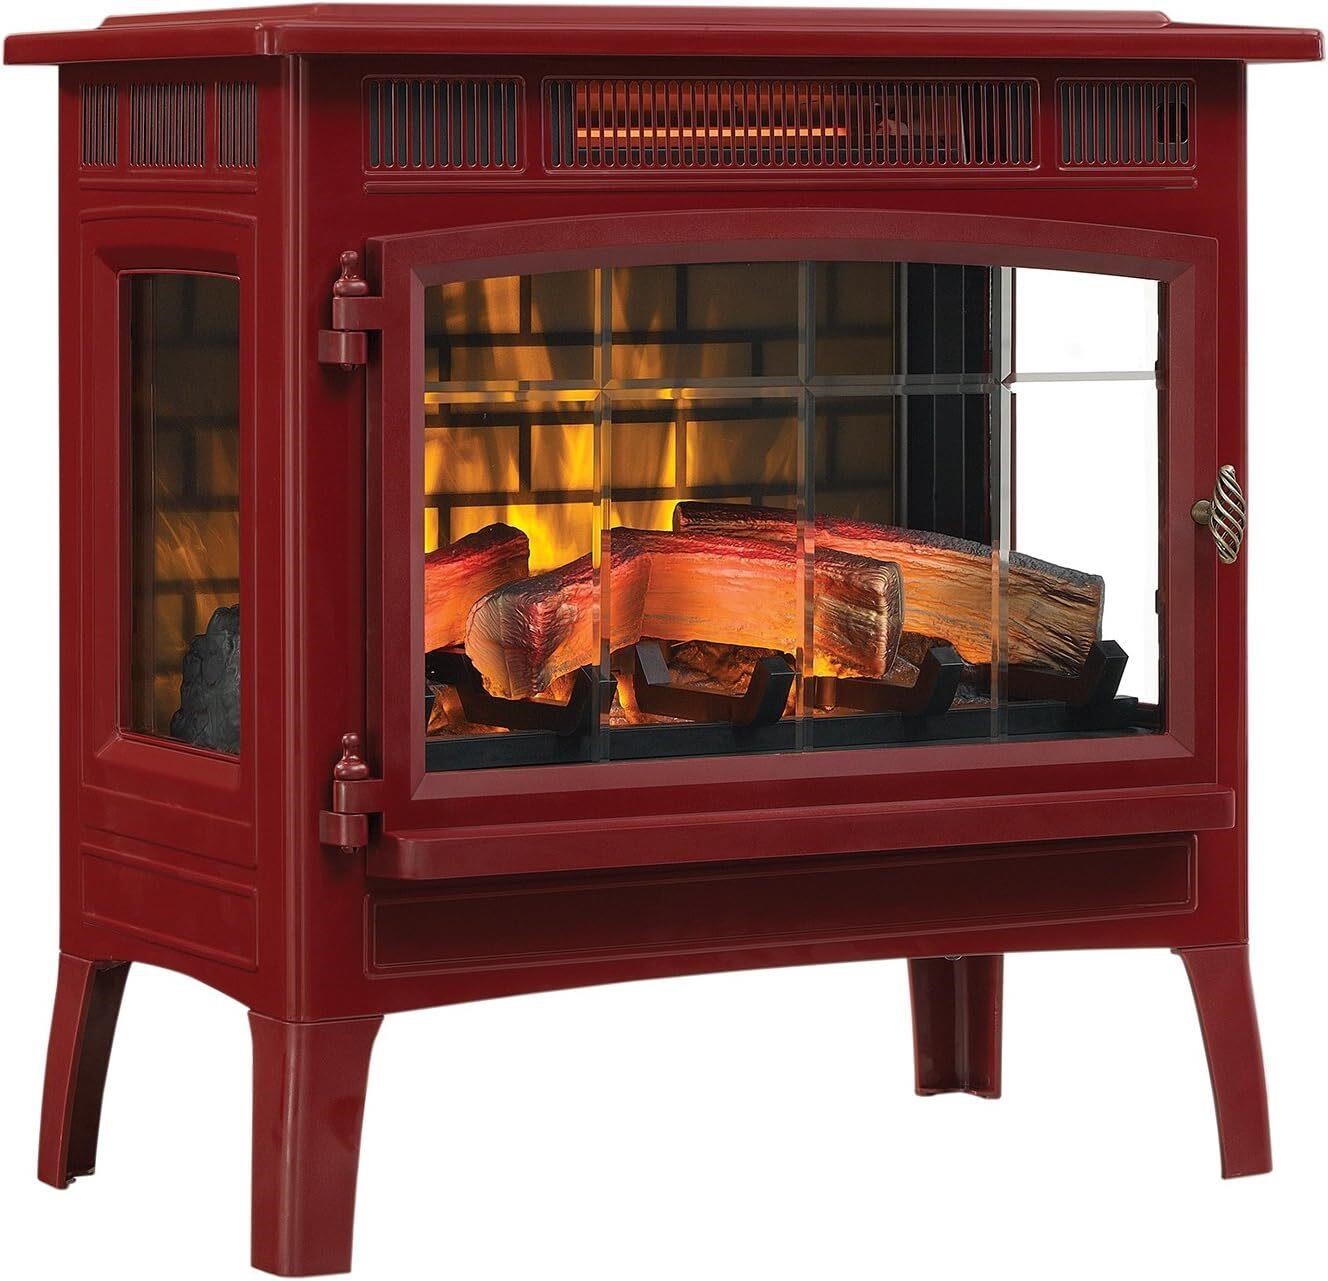 $230  Duraflame Electric Quartz Fireplace Stove